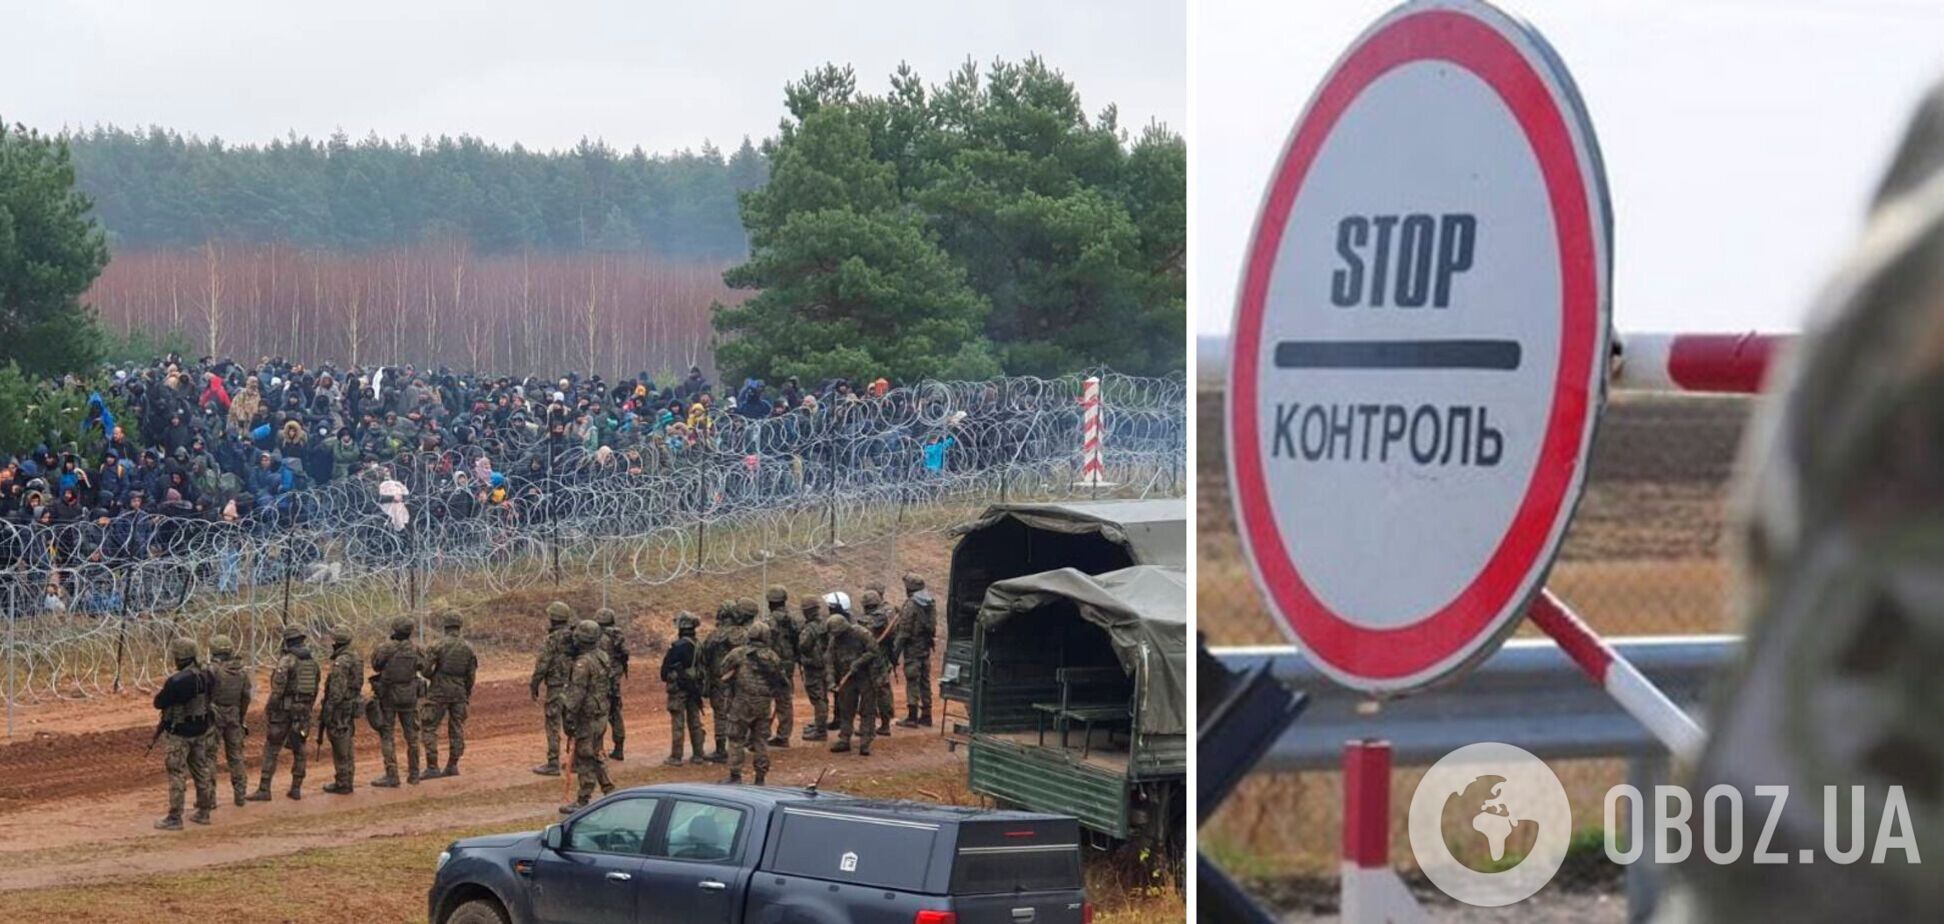 Геральд Кнаус та німецькі біженці: до чого тут Україна?